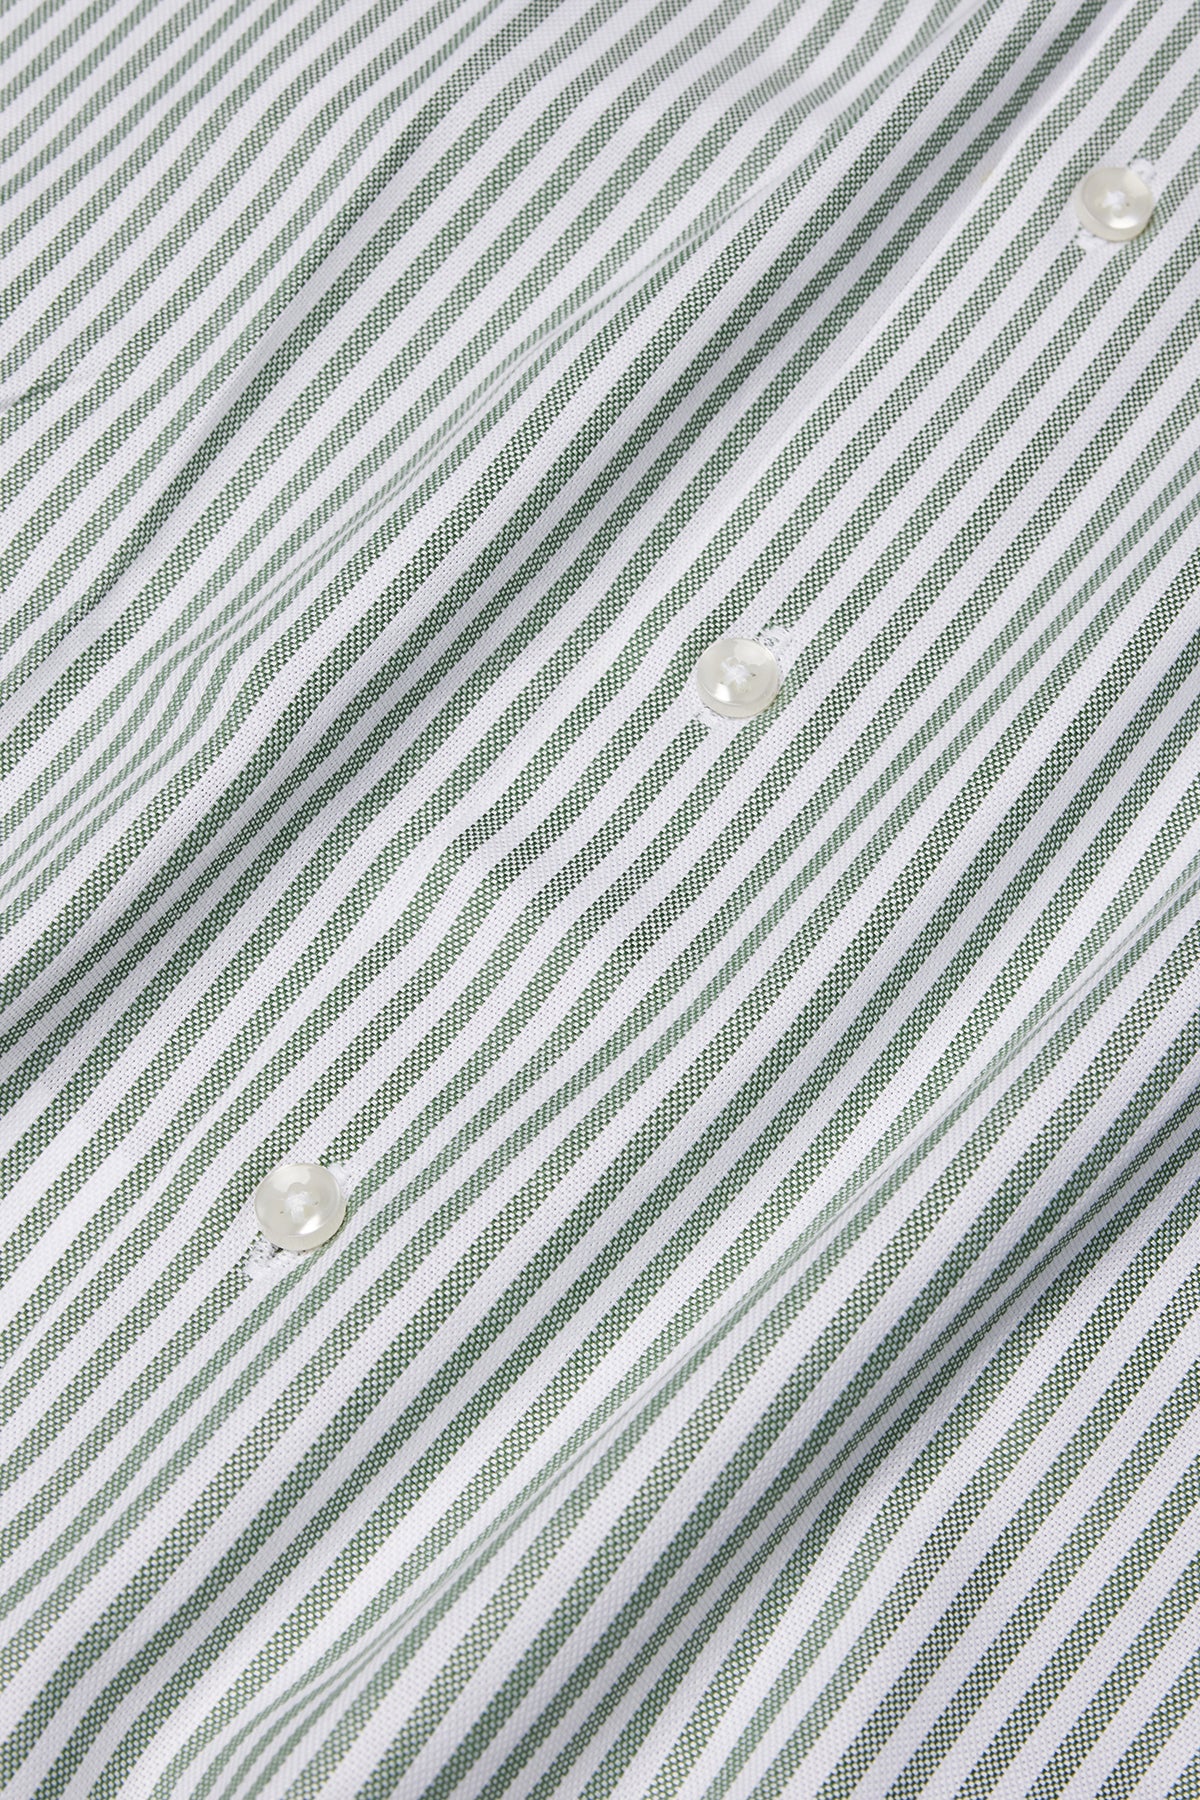 Green Striped White Collar Shirt